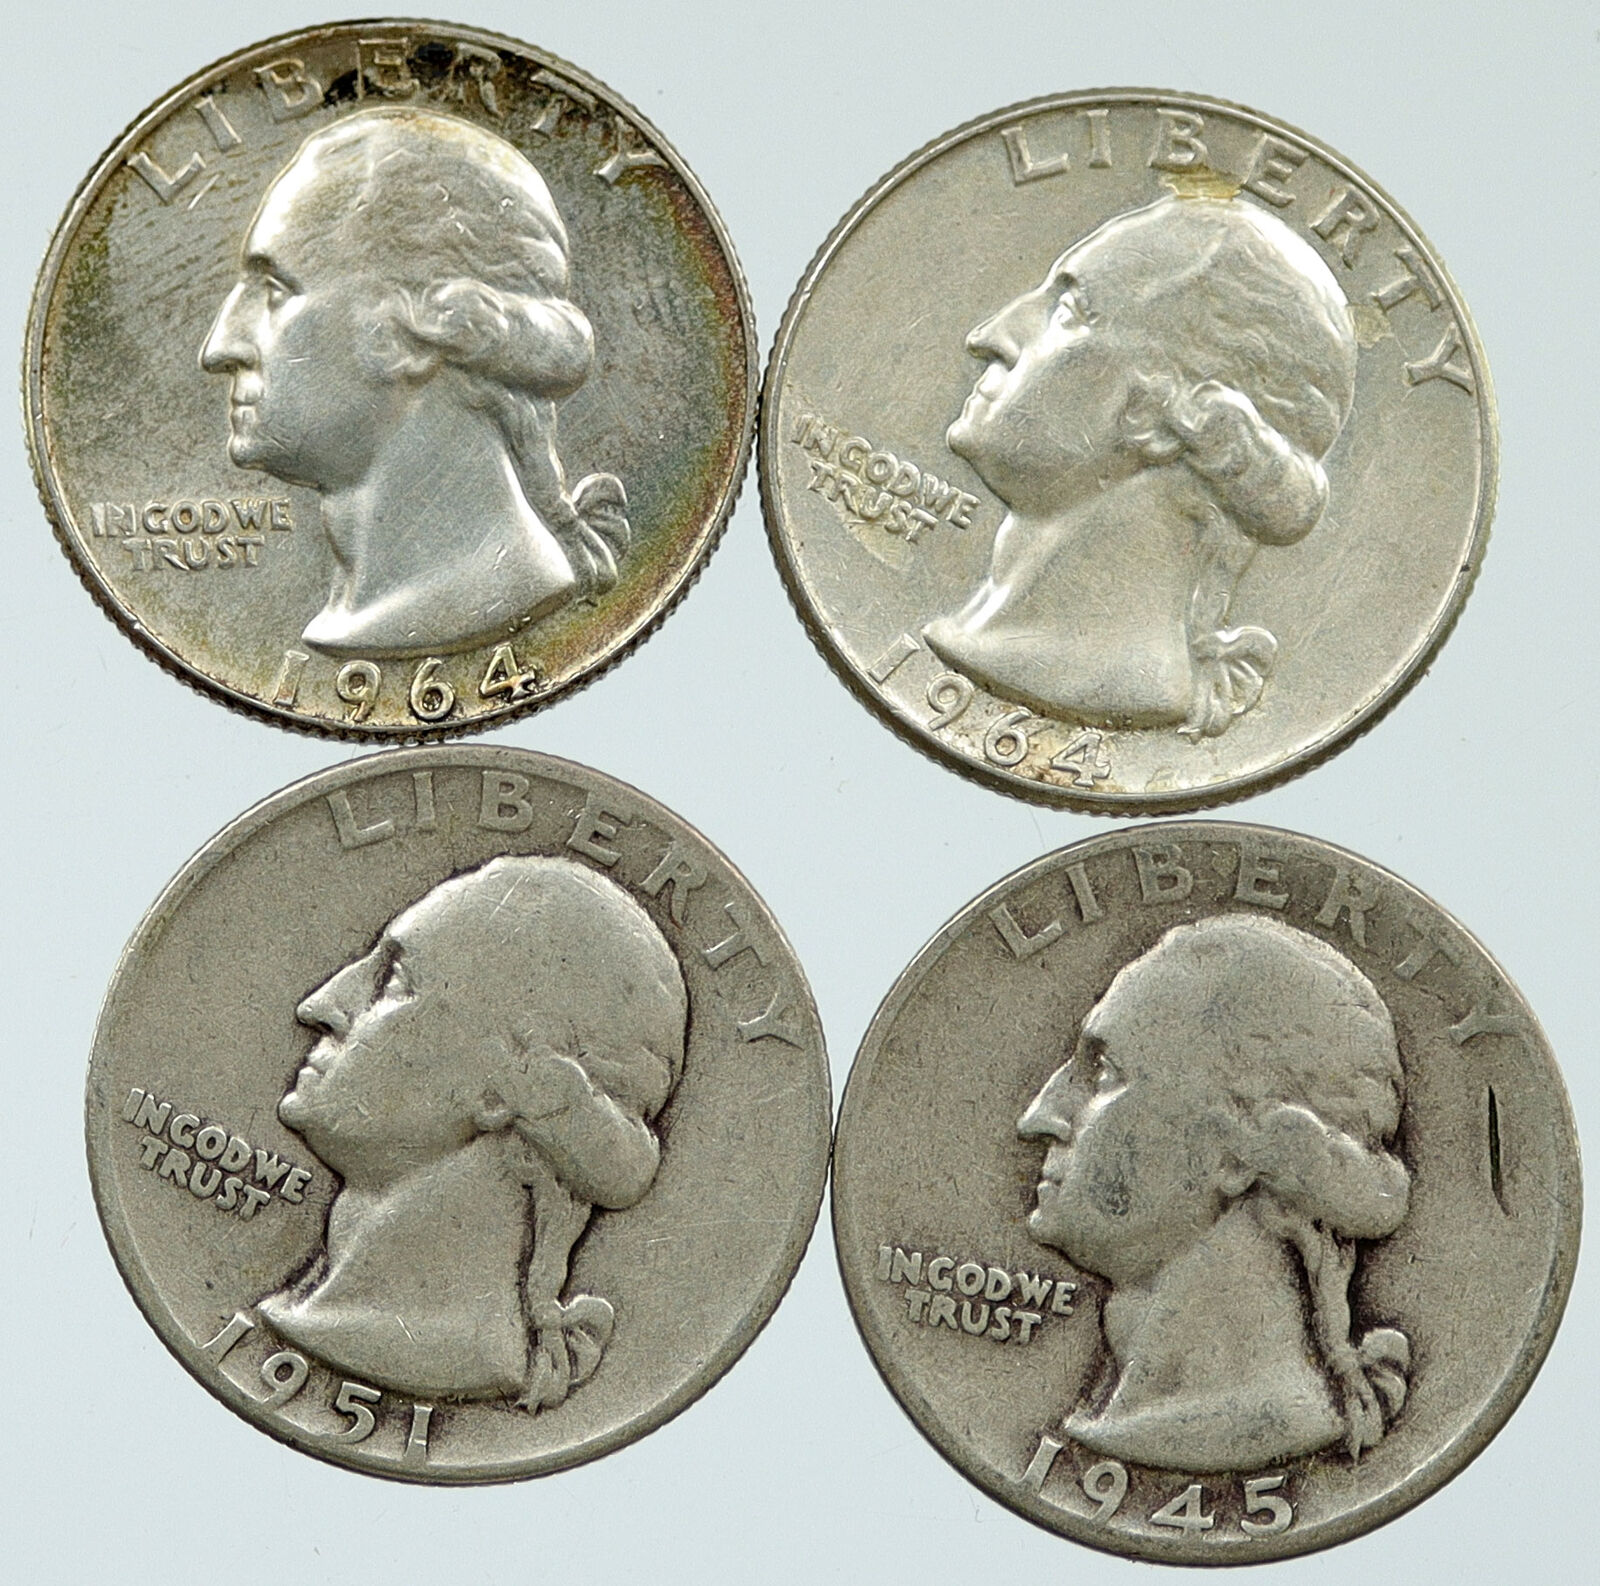 UNITED STATES USA President Washington Silver Lot of 4 Quarters Coins i116213